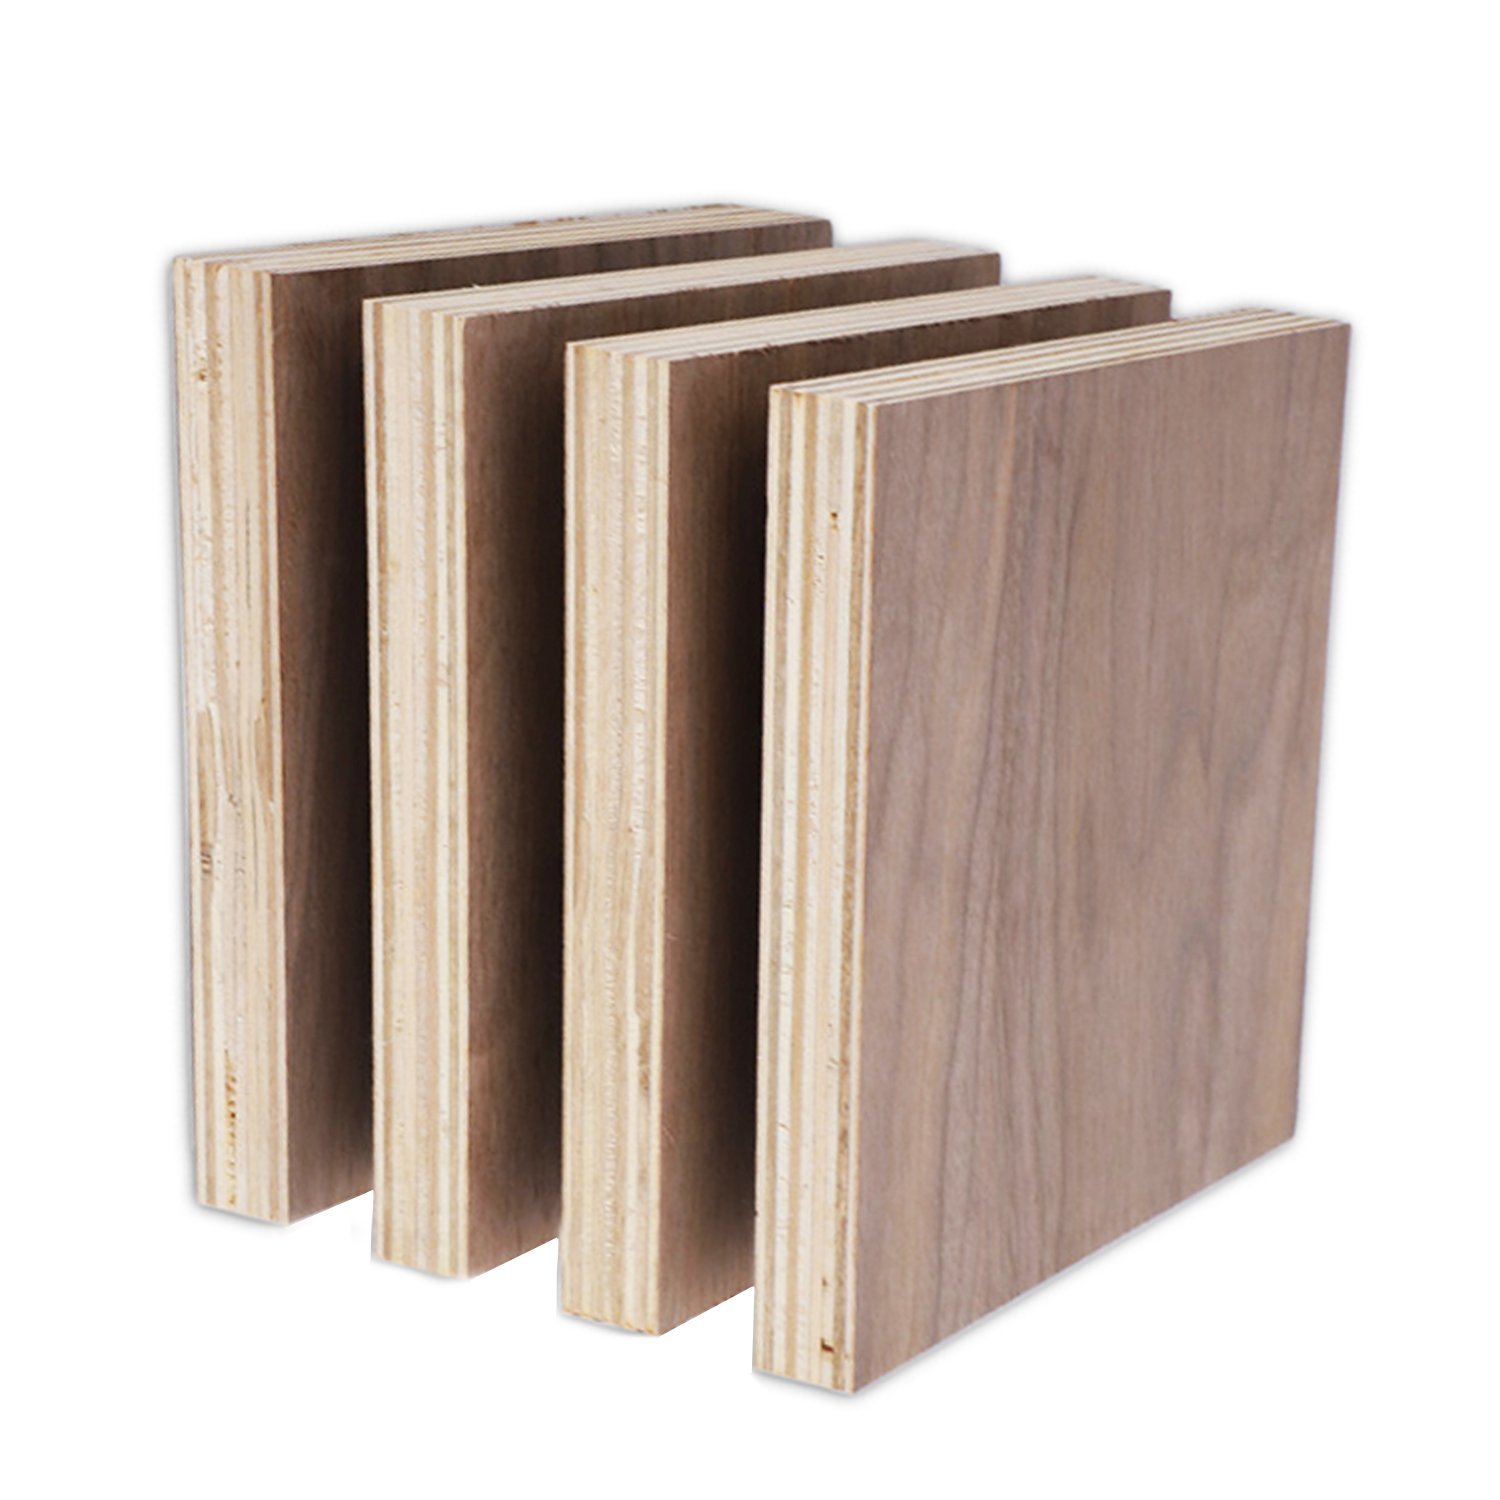 Walnut Wood Faced Ply Wood Board E0 E1 E2 Grade Plywood for Home Decoration